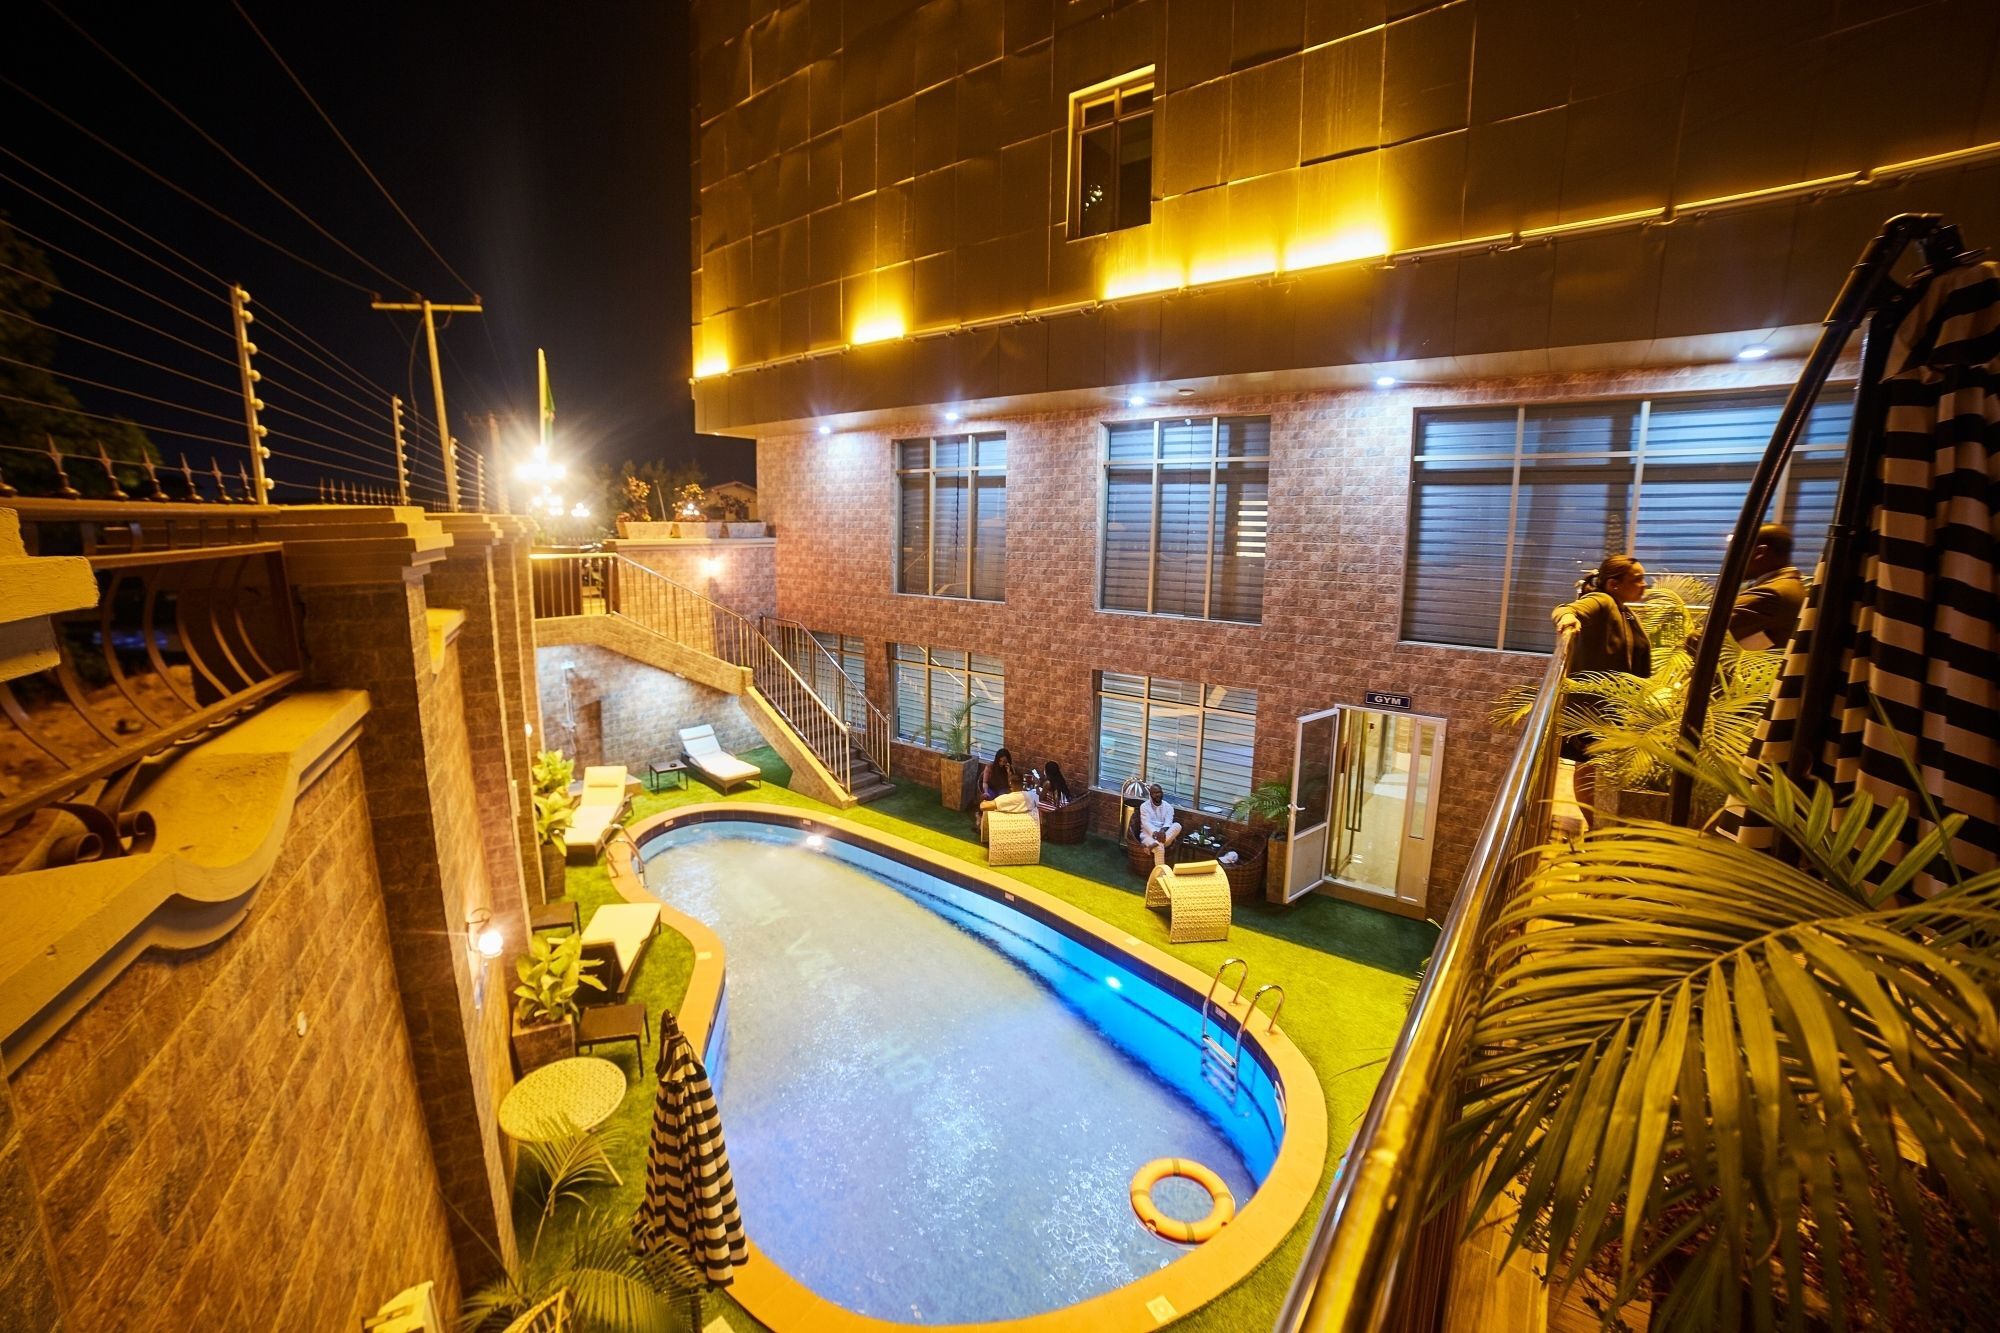 Corinthia Villa Hotel Abuja Exterior photo